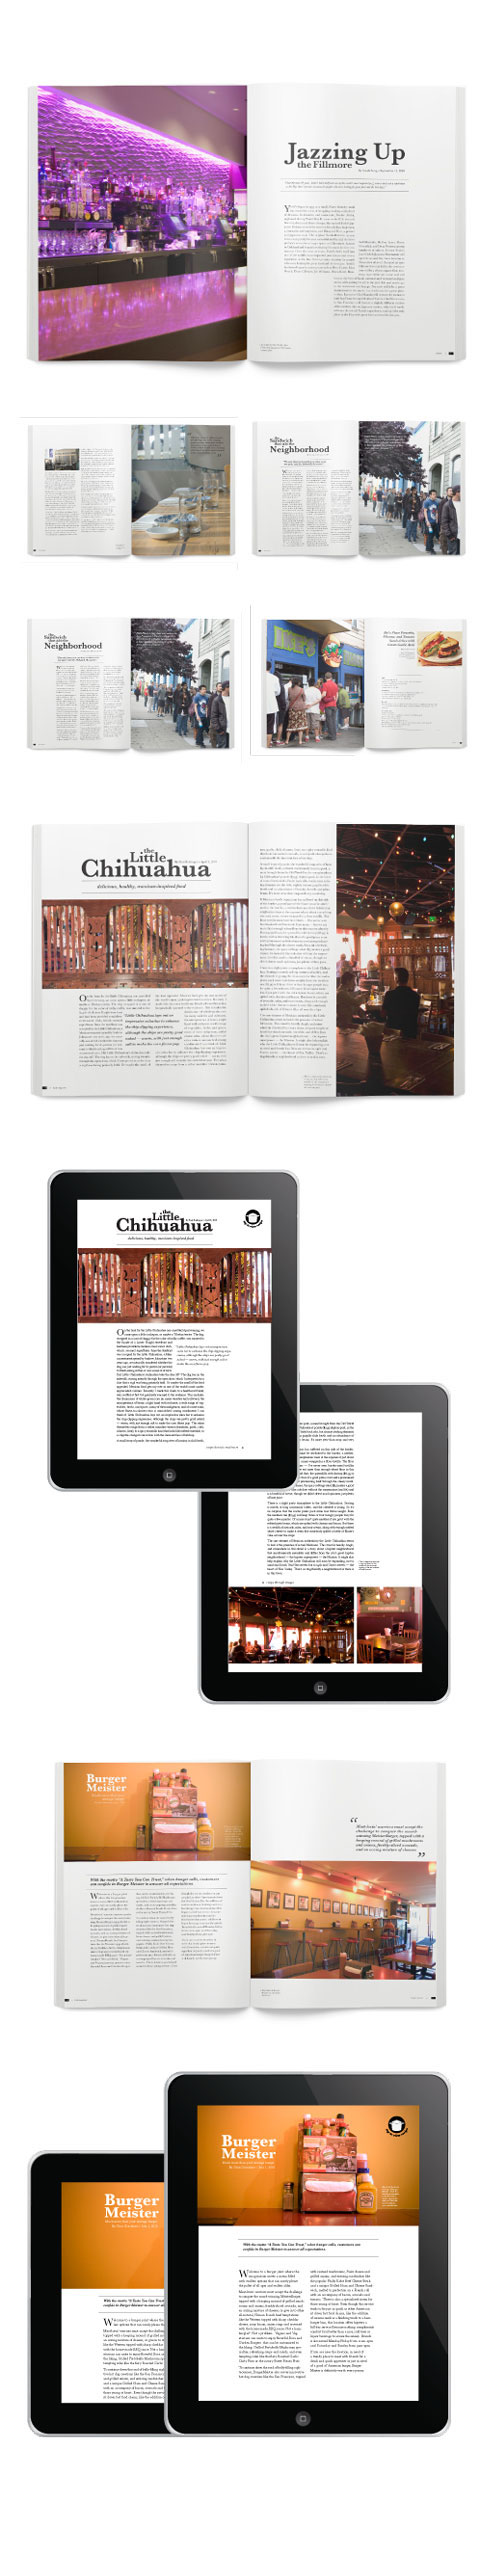 publication iPad